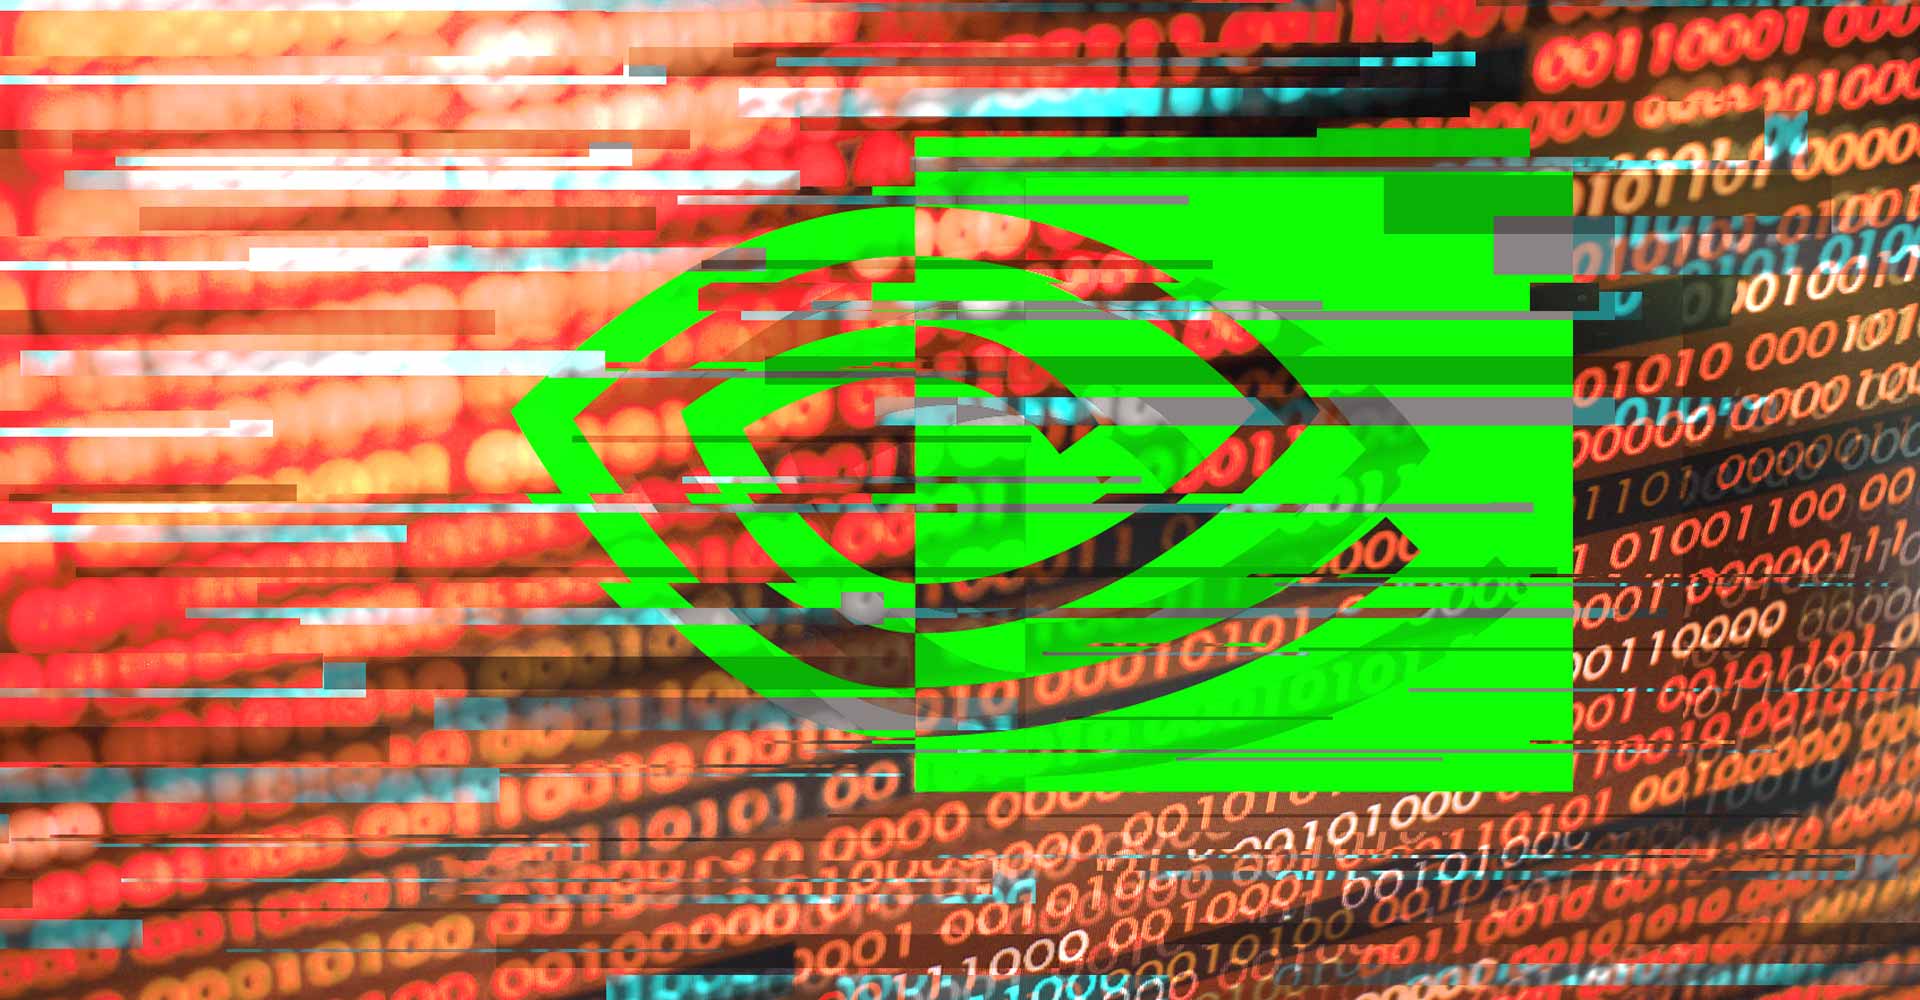 Nvidia Allegedly Hacks Back | Avast